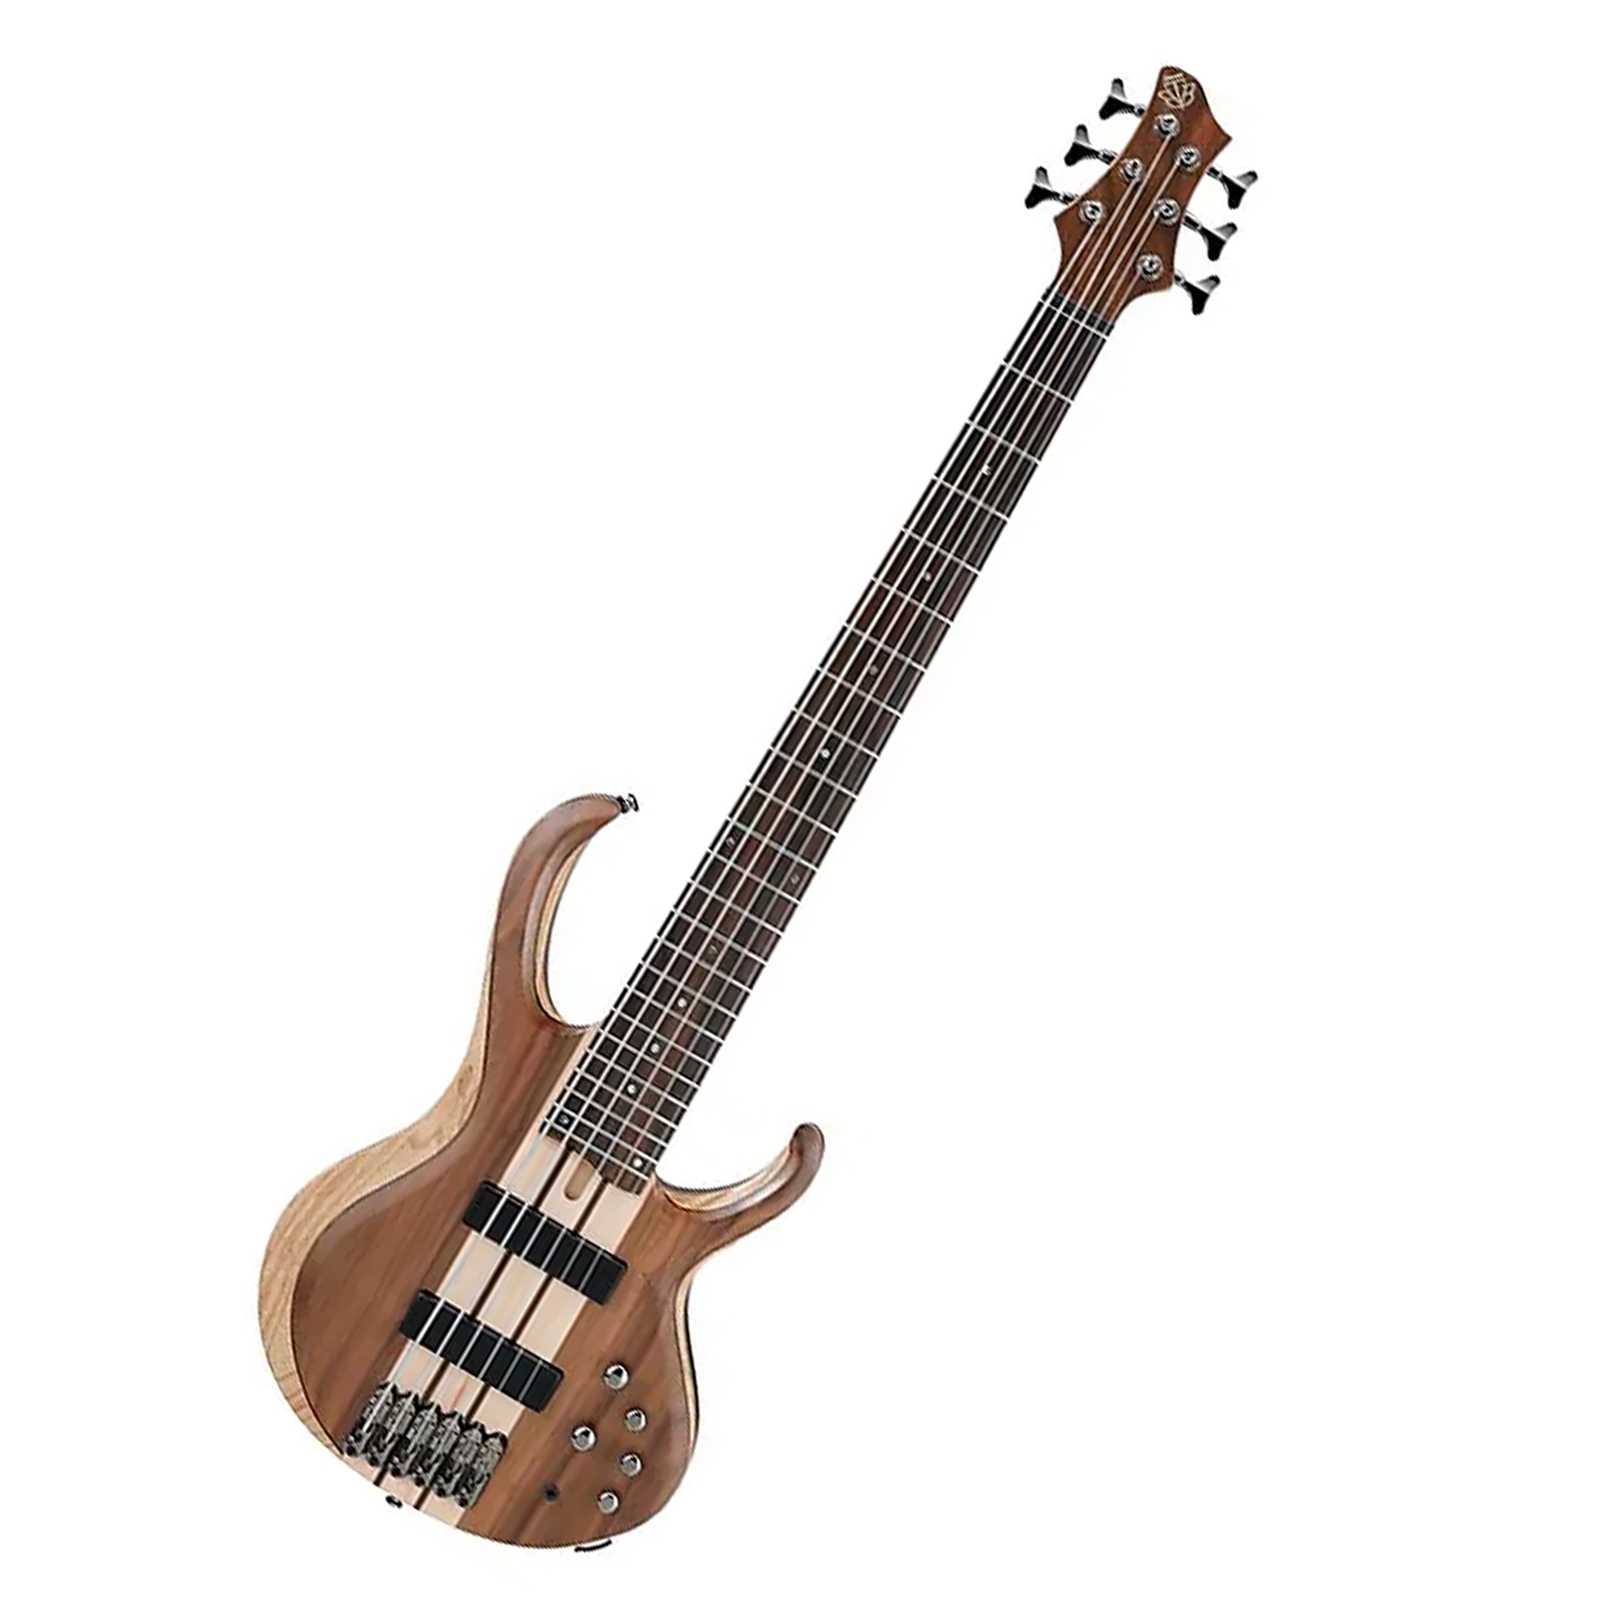 Ibanez BTB746 6-String Electric Bass Guitar